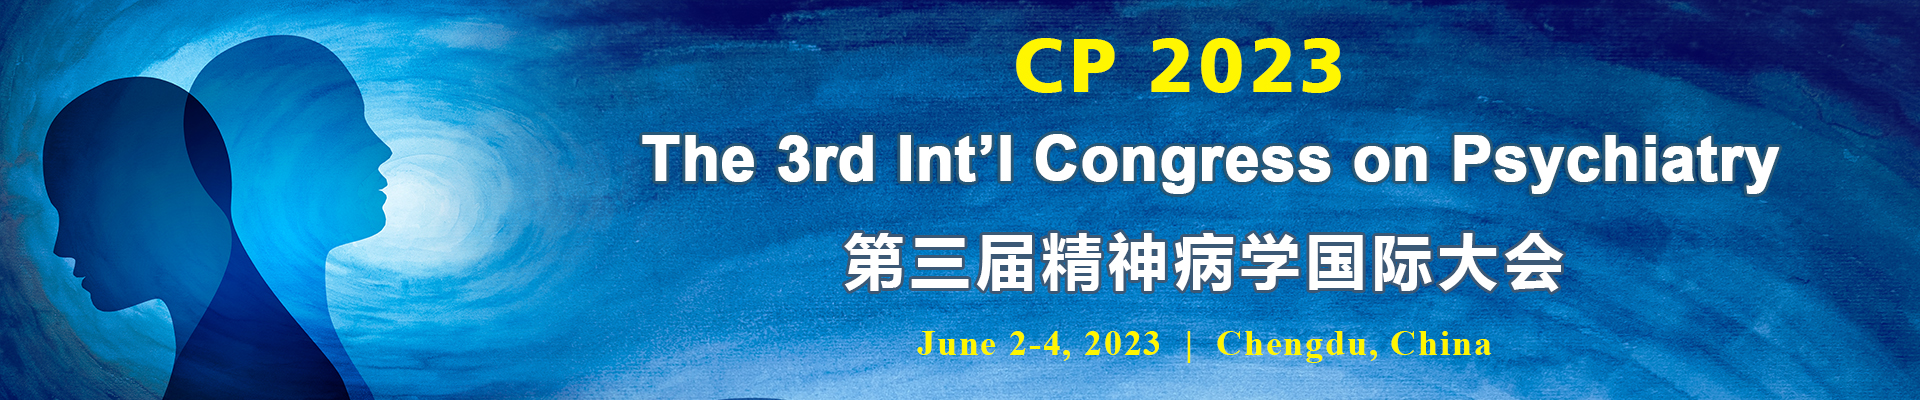 The 3rd Int’l Congress on Psychiatry (CP 2023), Chengdu, Sichuan, China